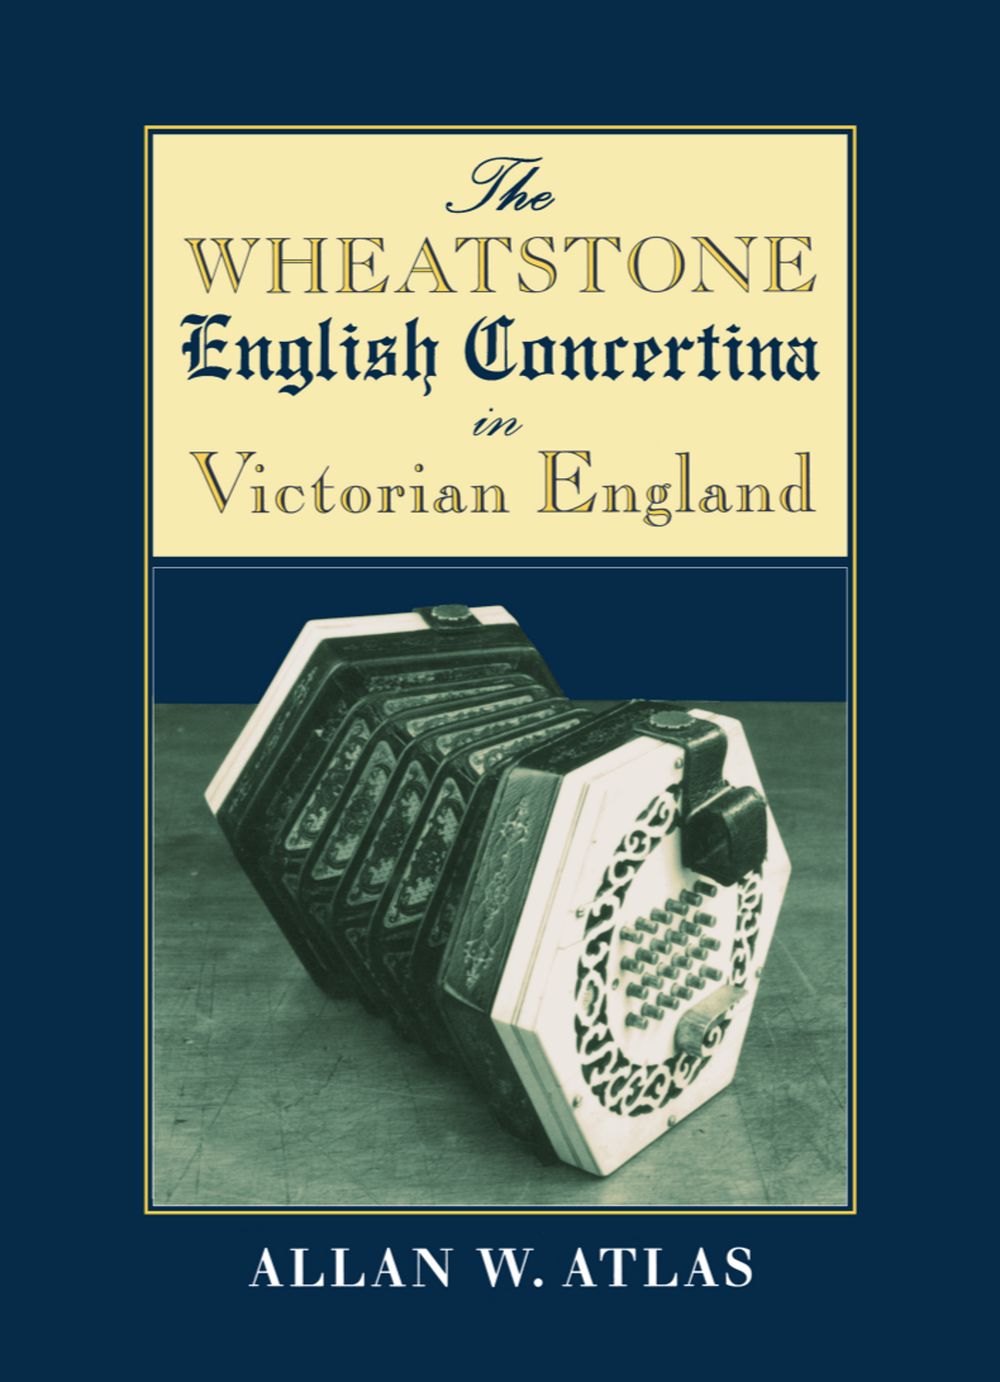 Wheatstone English Concertina In Victorian England Sheet Music Songbook